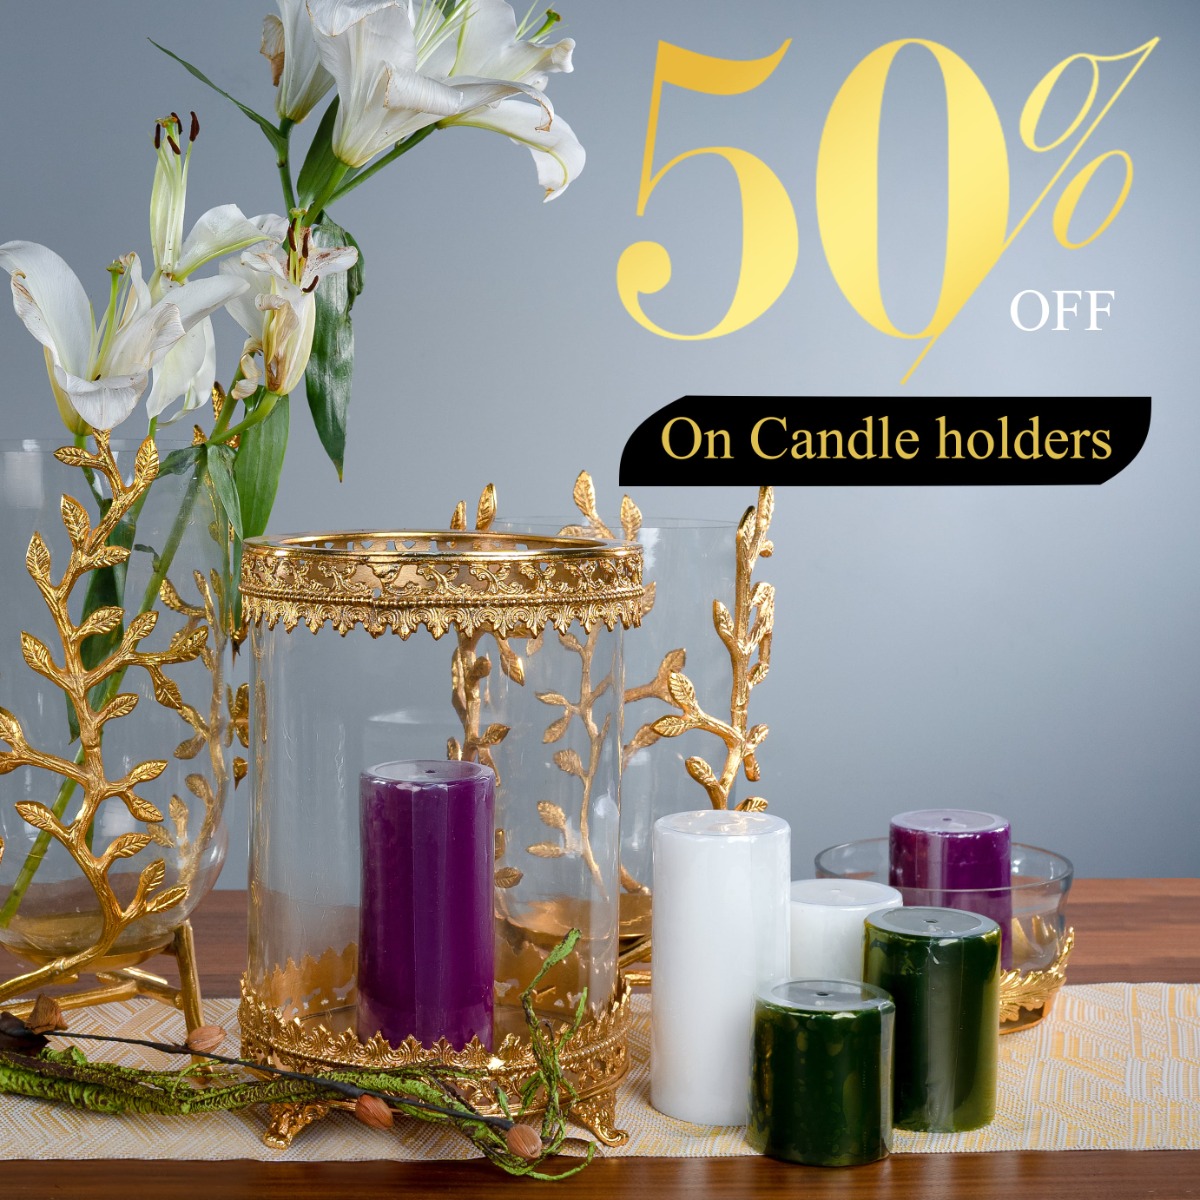 Candle Holder sale